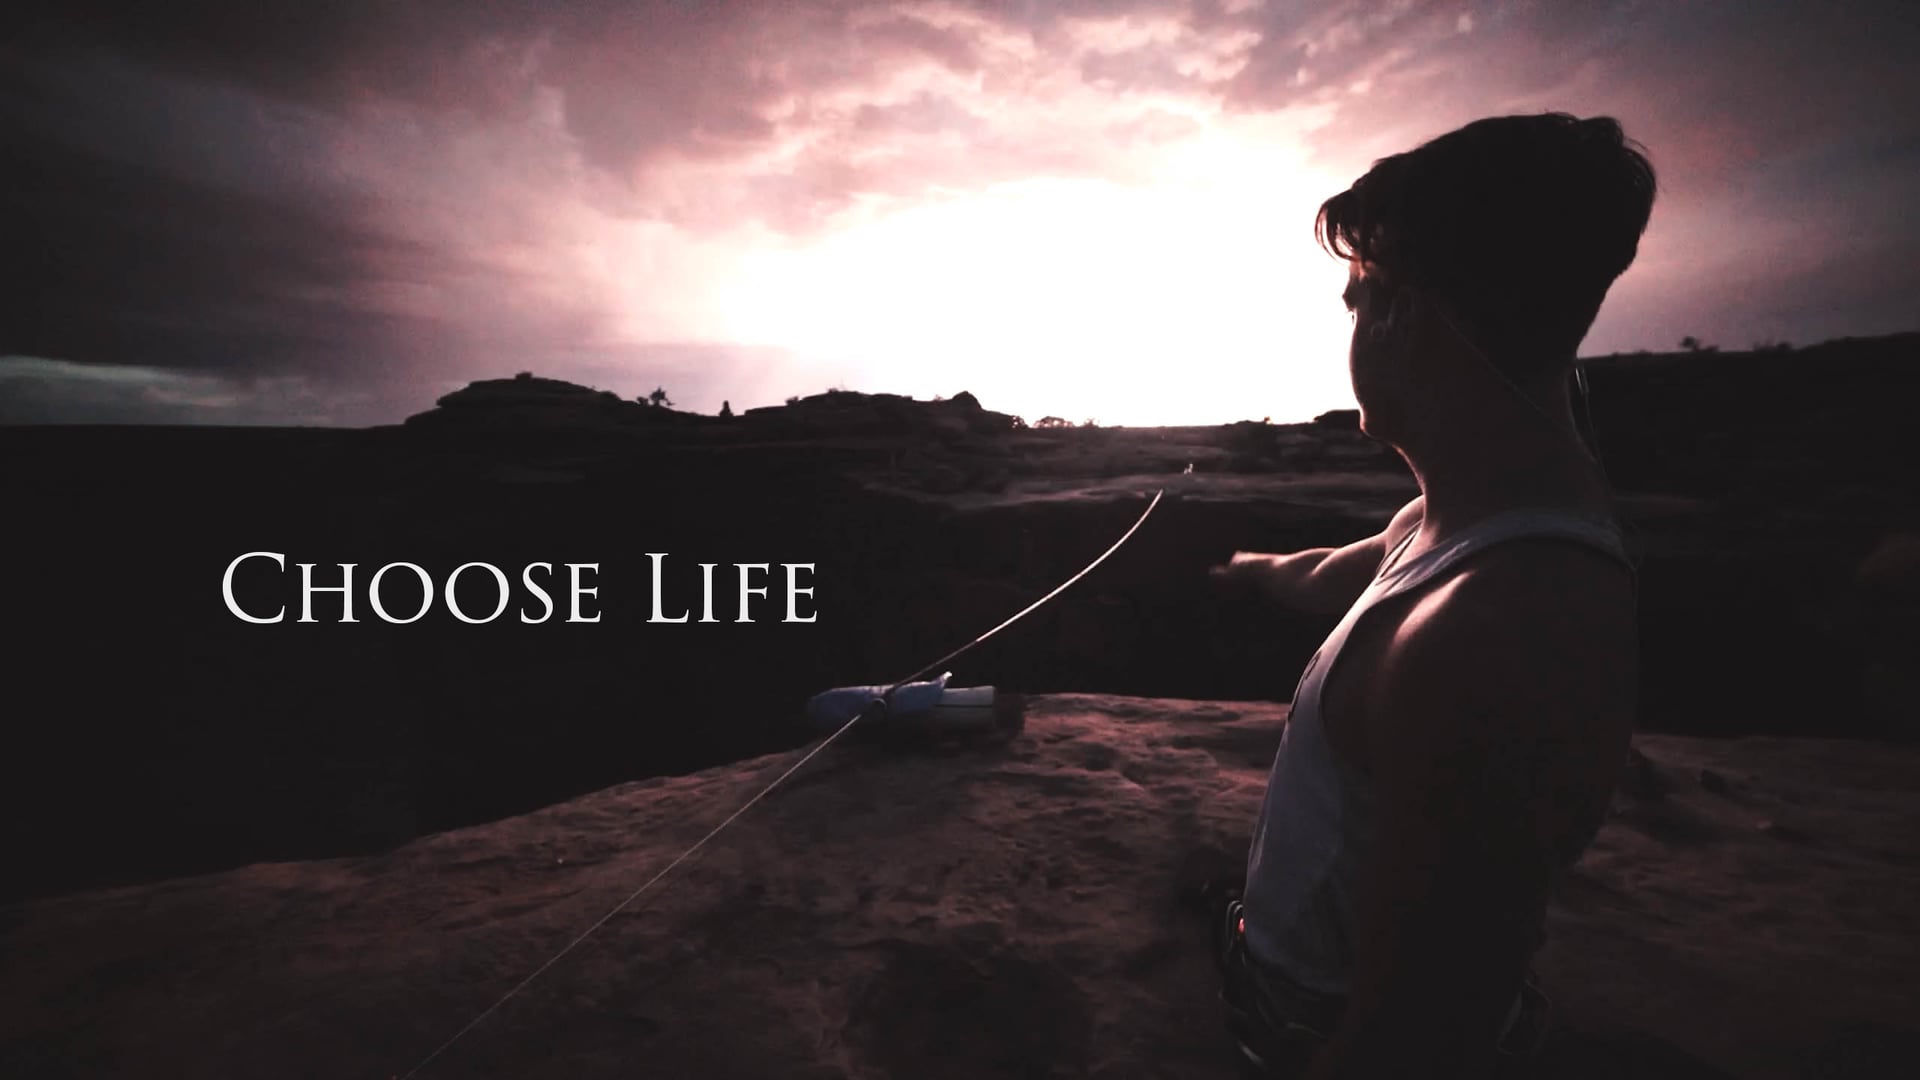 My choose my life. I choose Life. Постер choose Life. Choose Life фото. I choose Life picture.